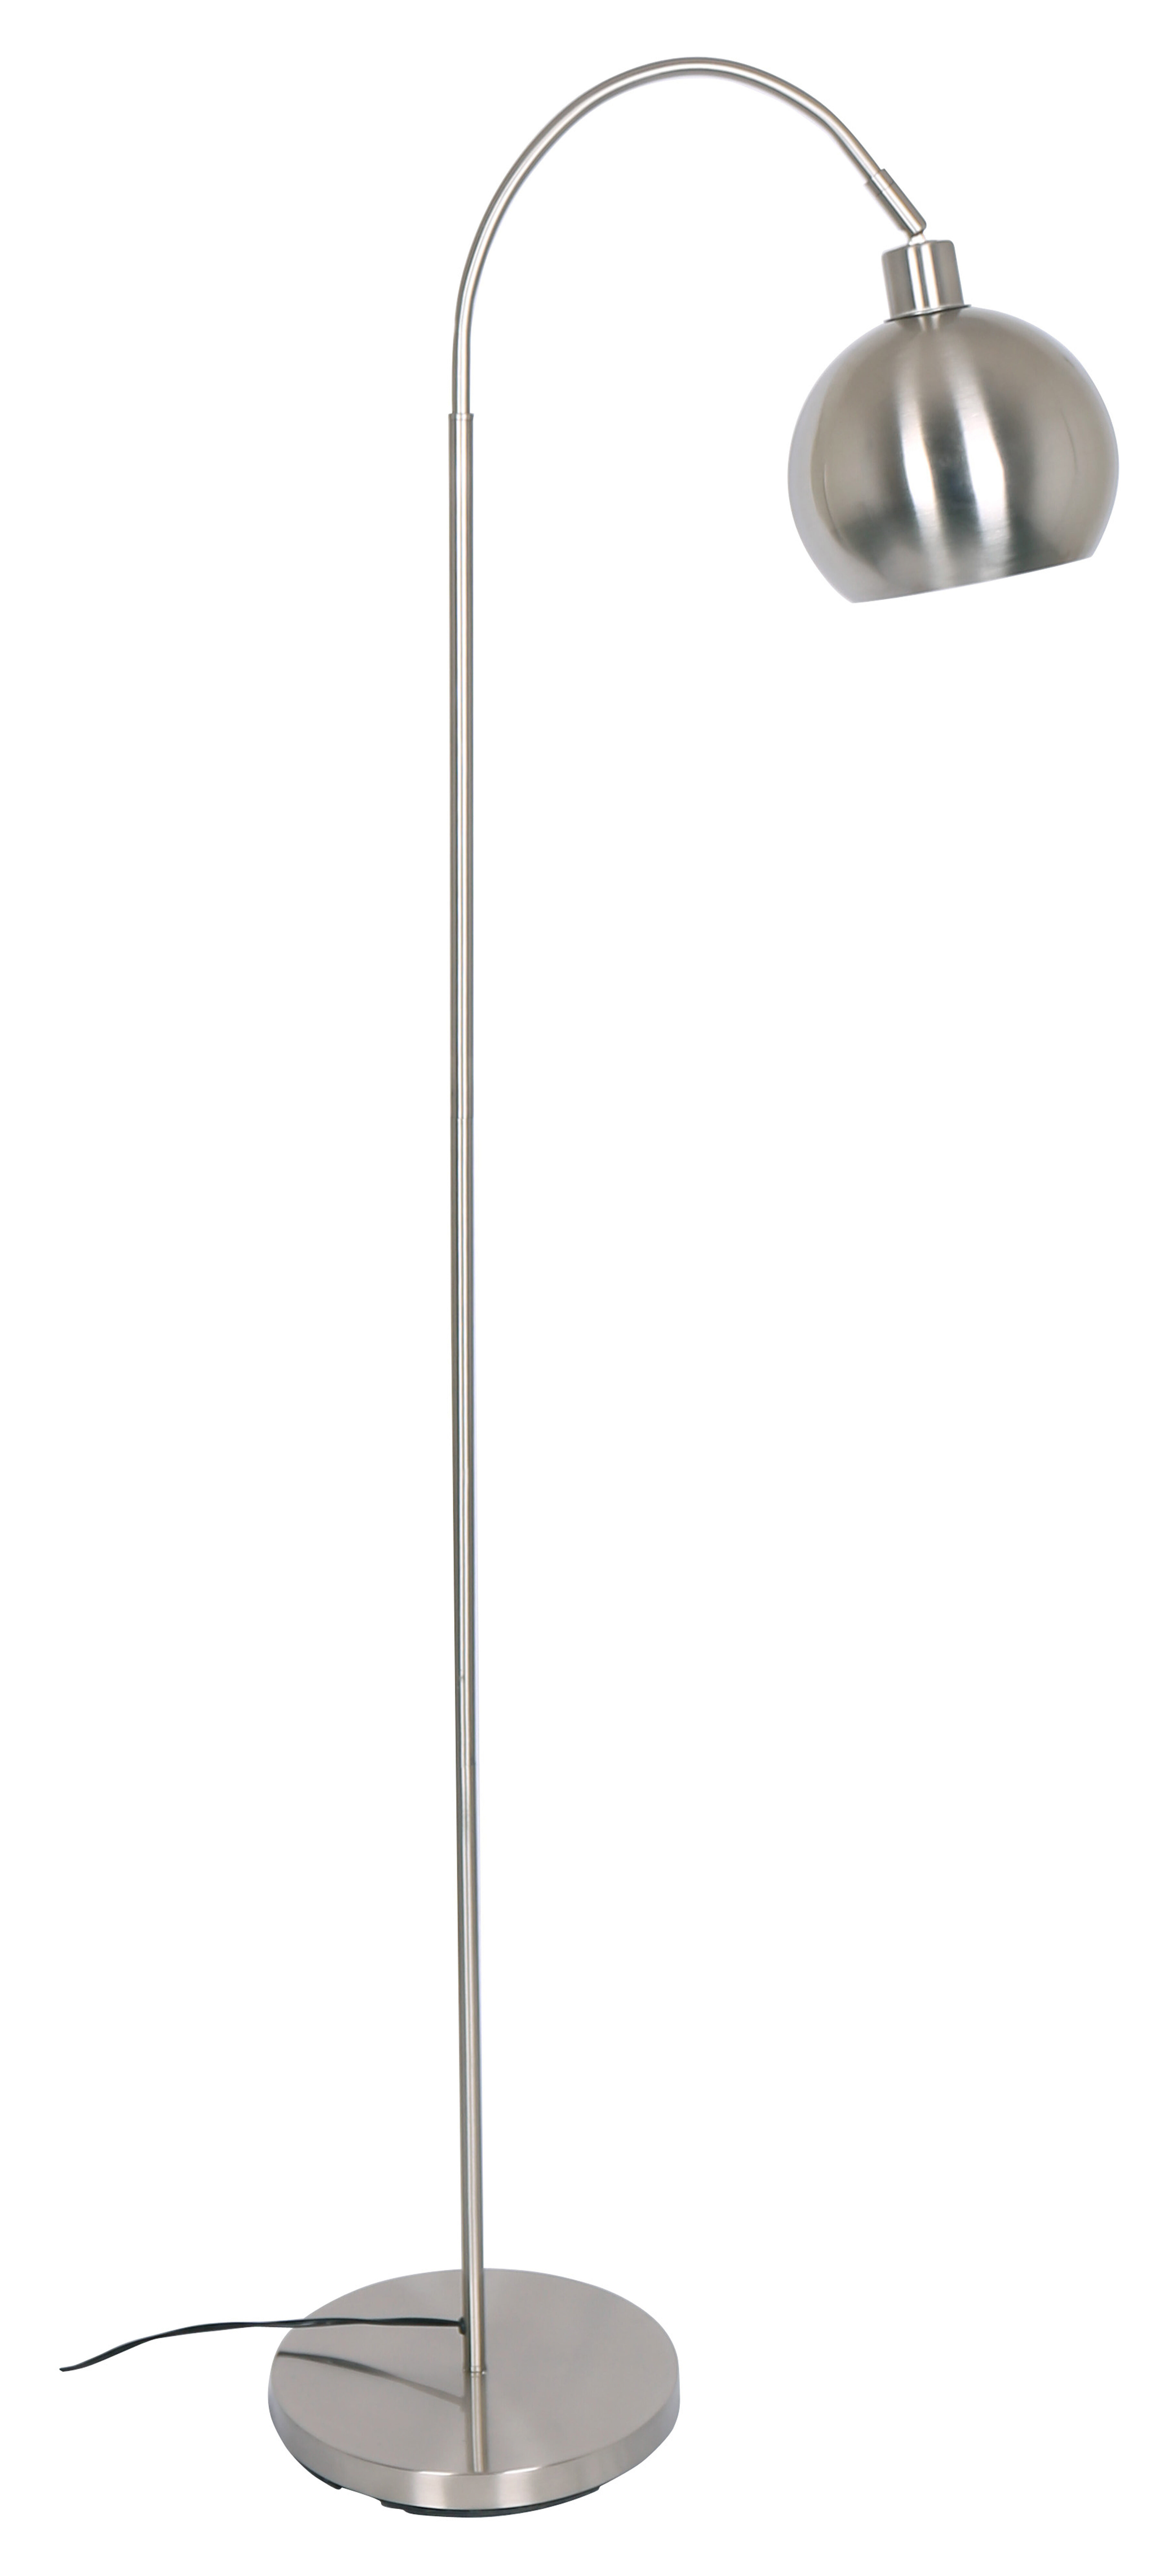 Artistiq Vloerlamp 'Foster' 153cm hoog, kleur Zilver